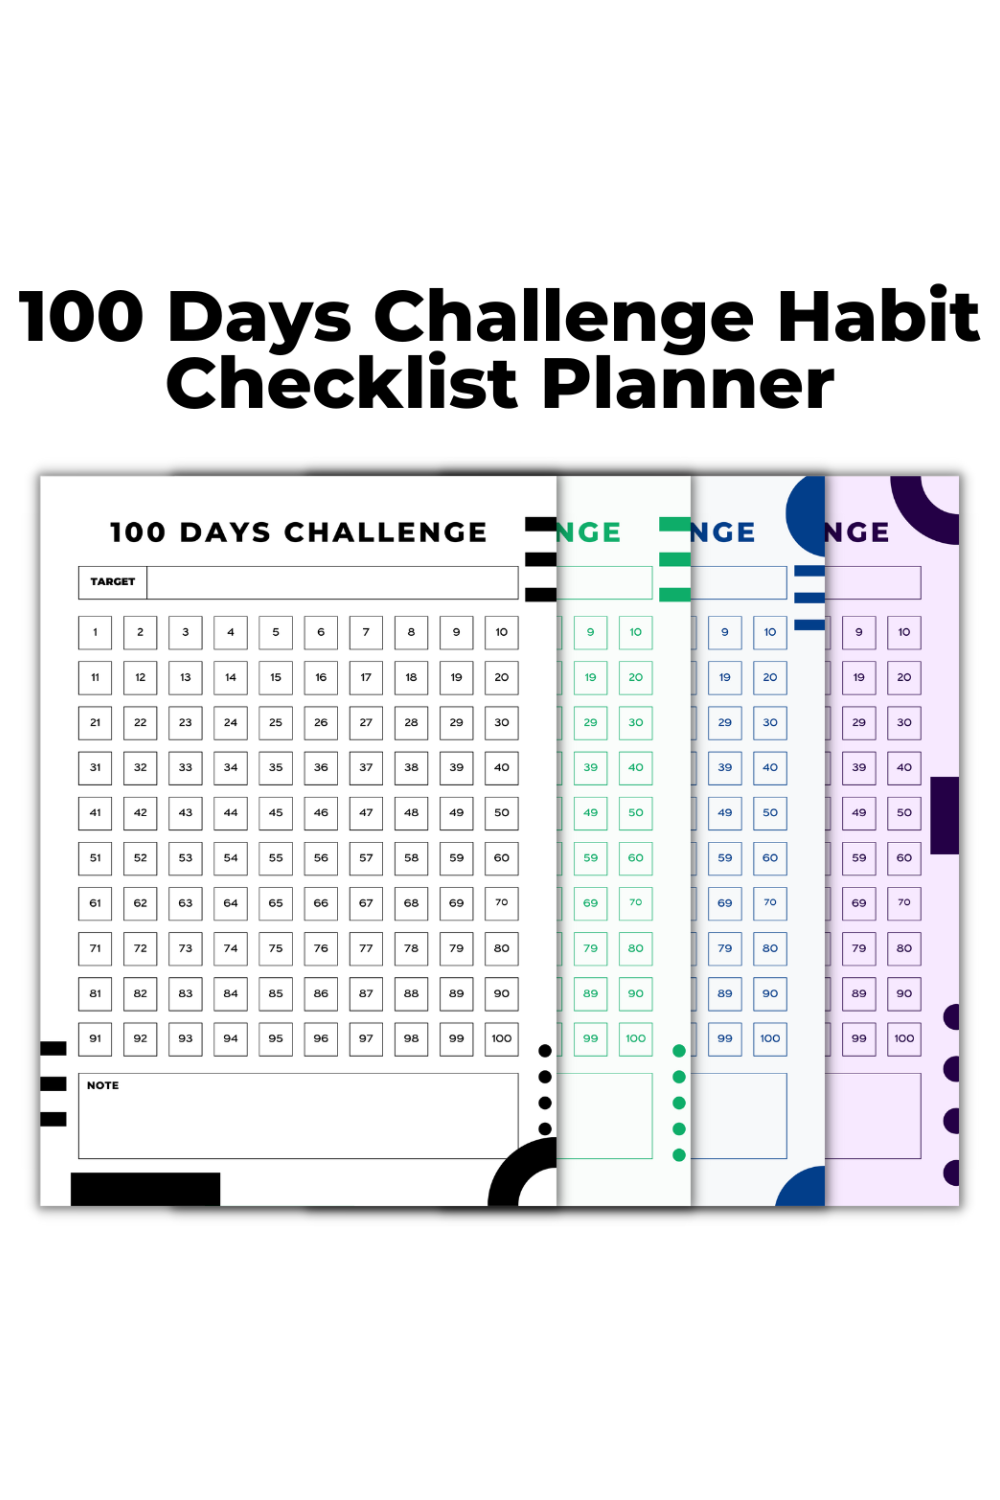 100 Days Challenge Habit Checklist Planner Template pinterest preview image.